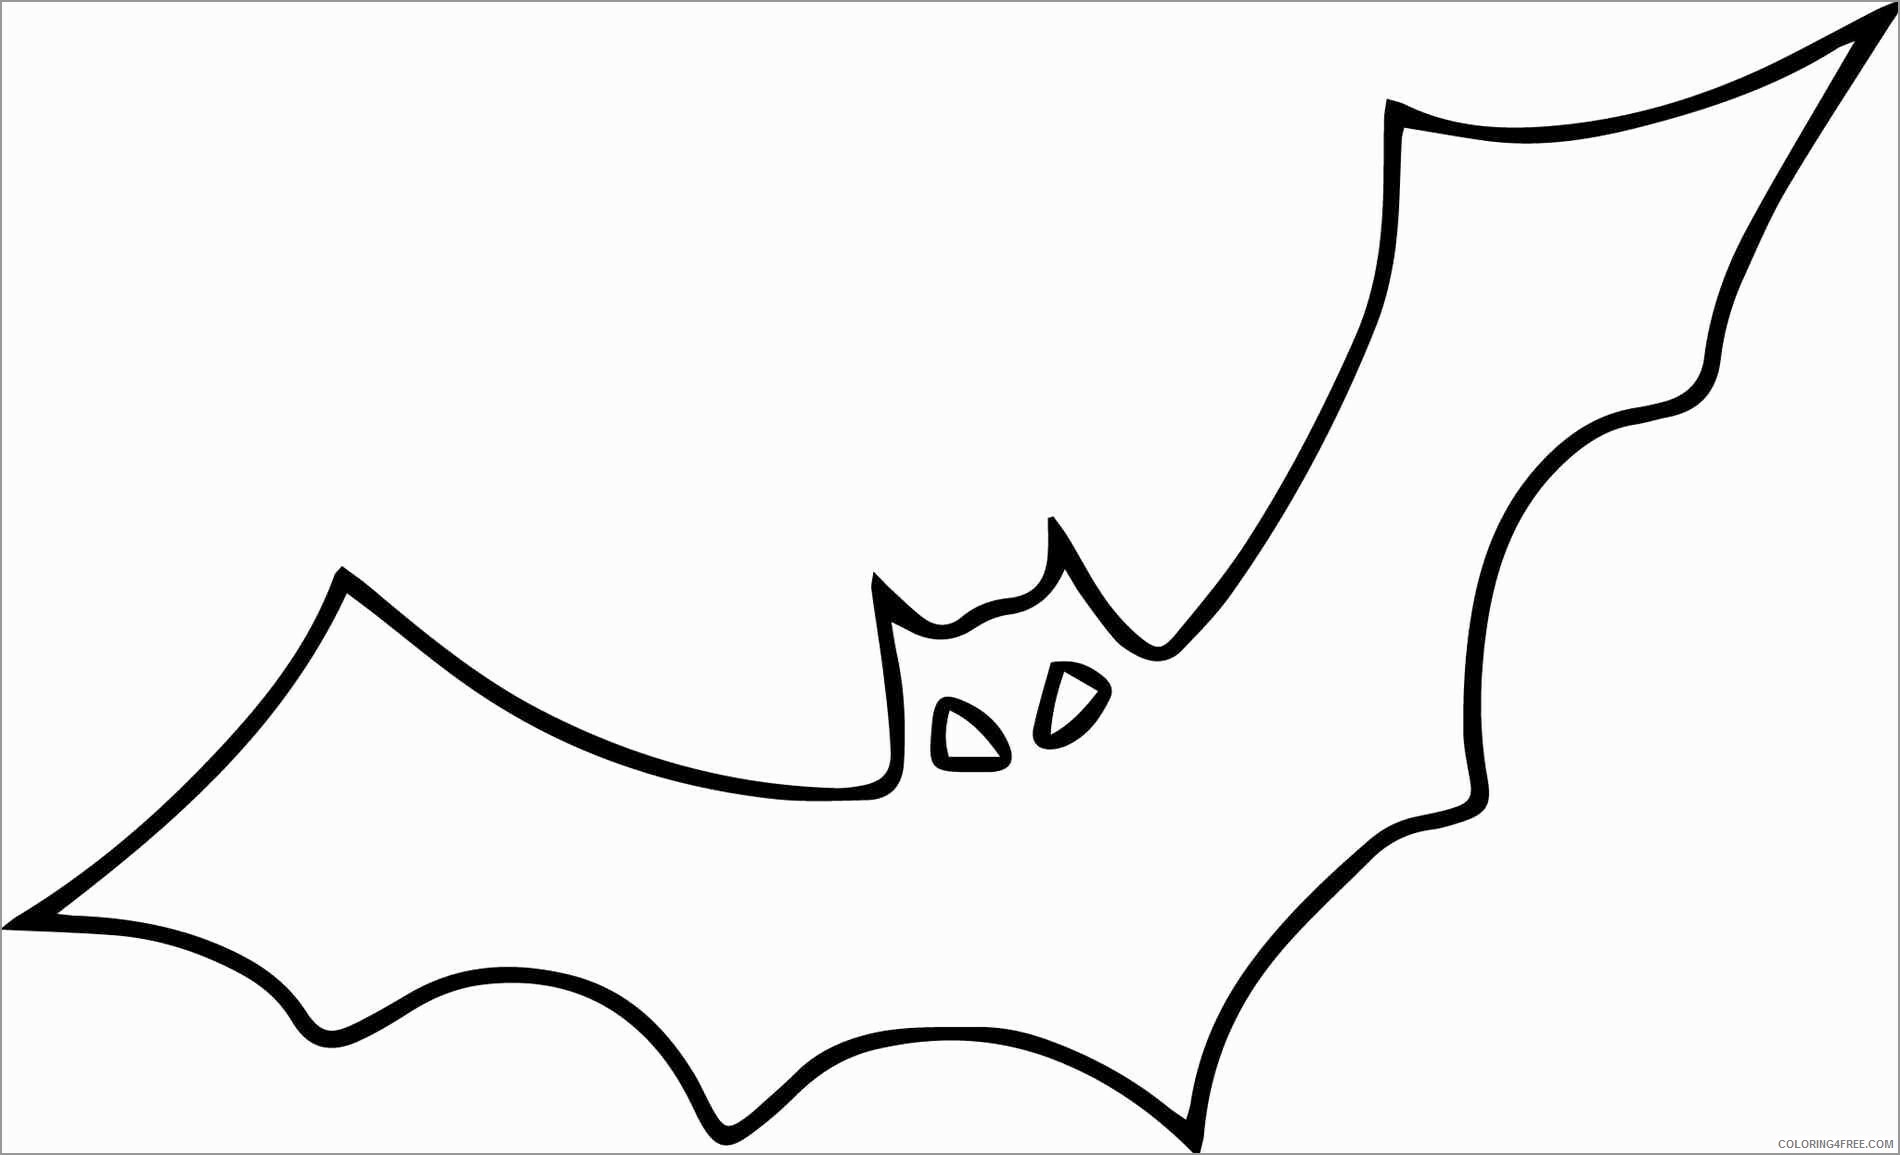 Bat Coloring Pages Animal Printable Sheets bat symbol 2021 0223 Coloring4free